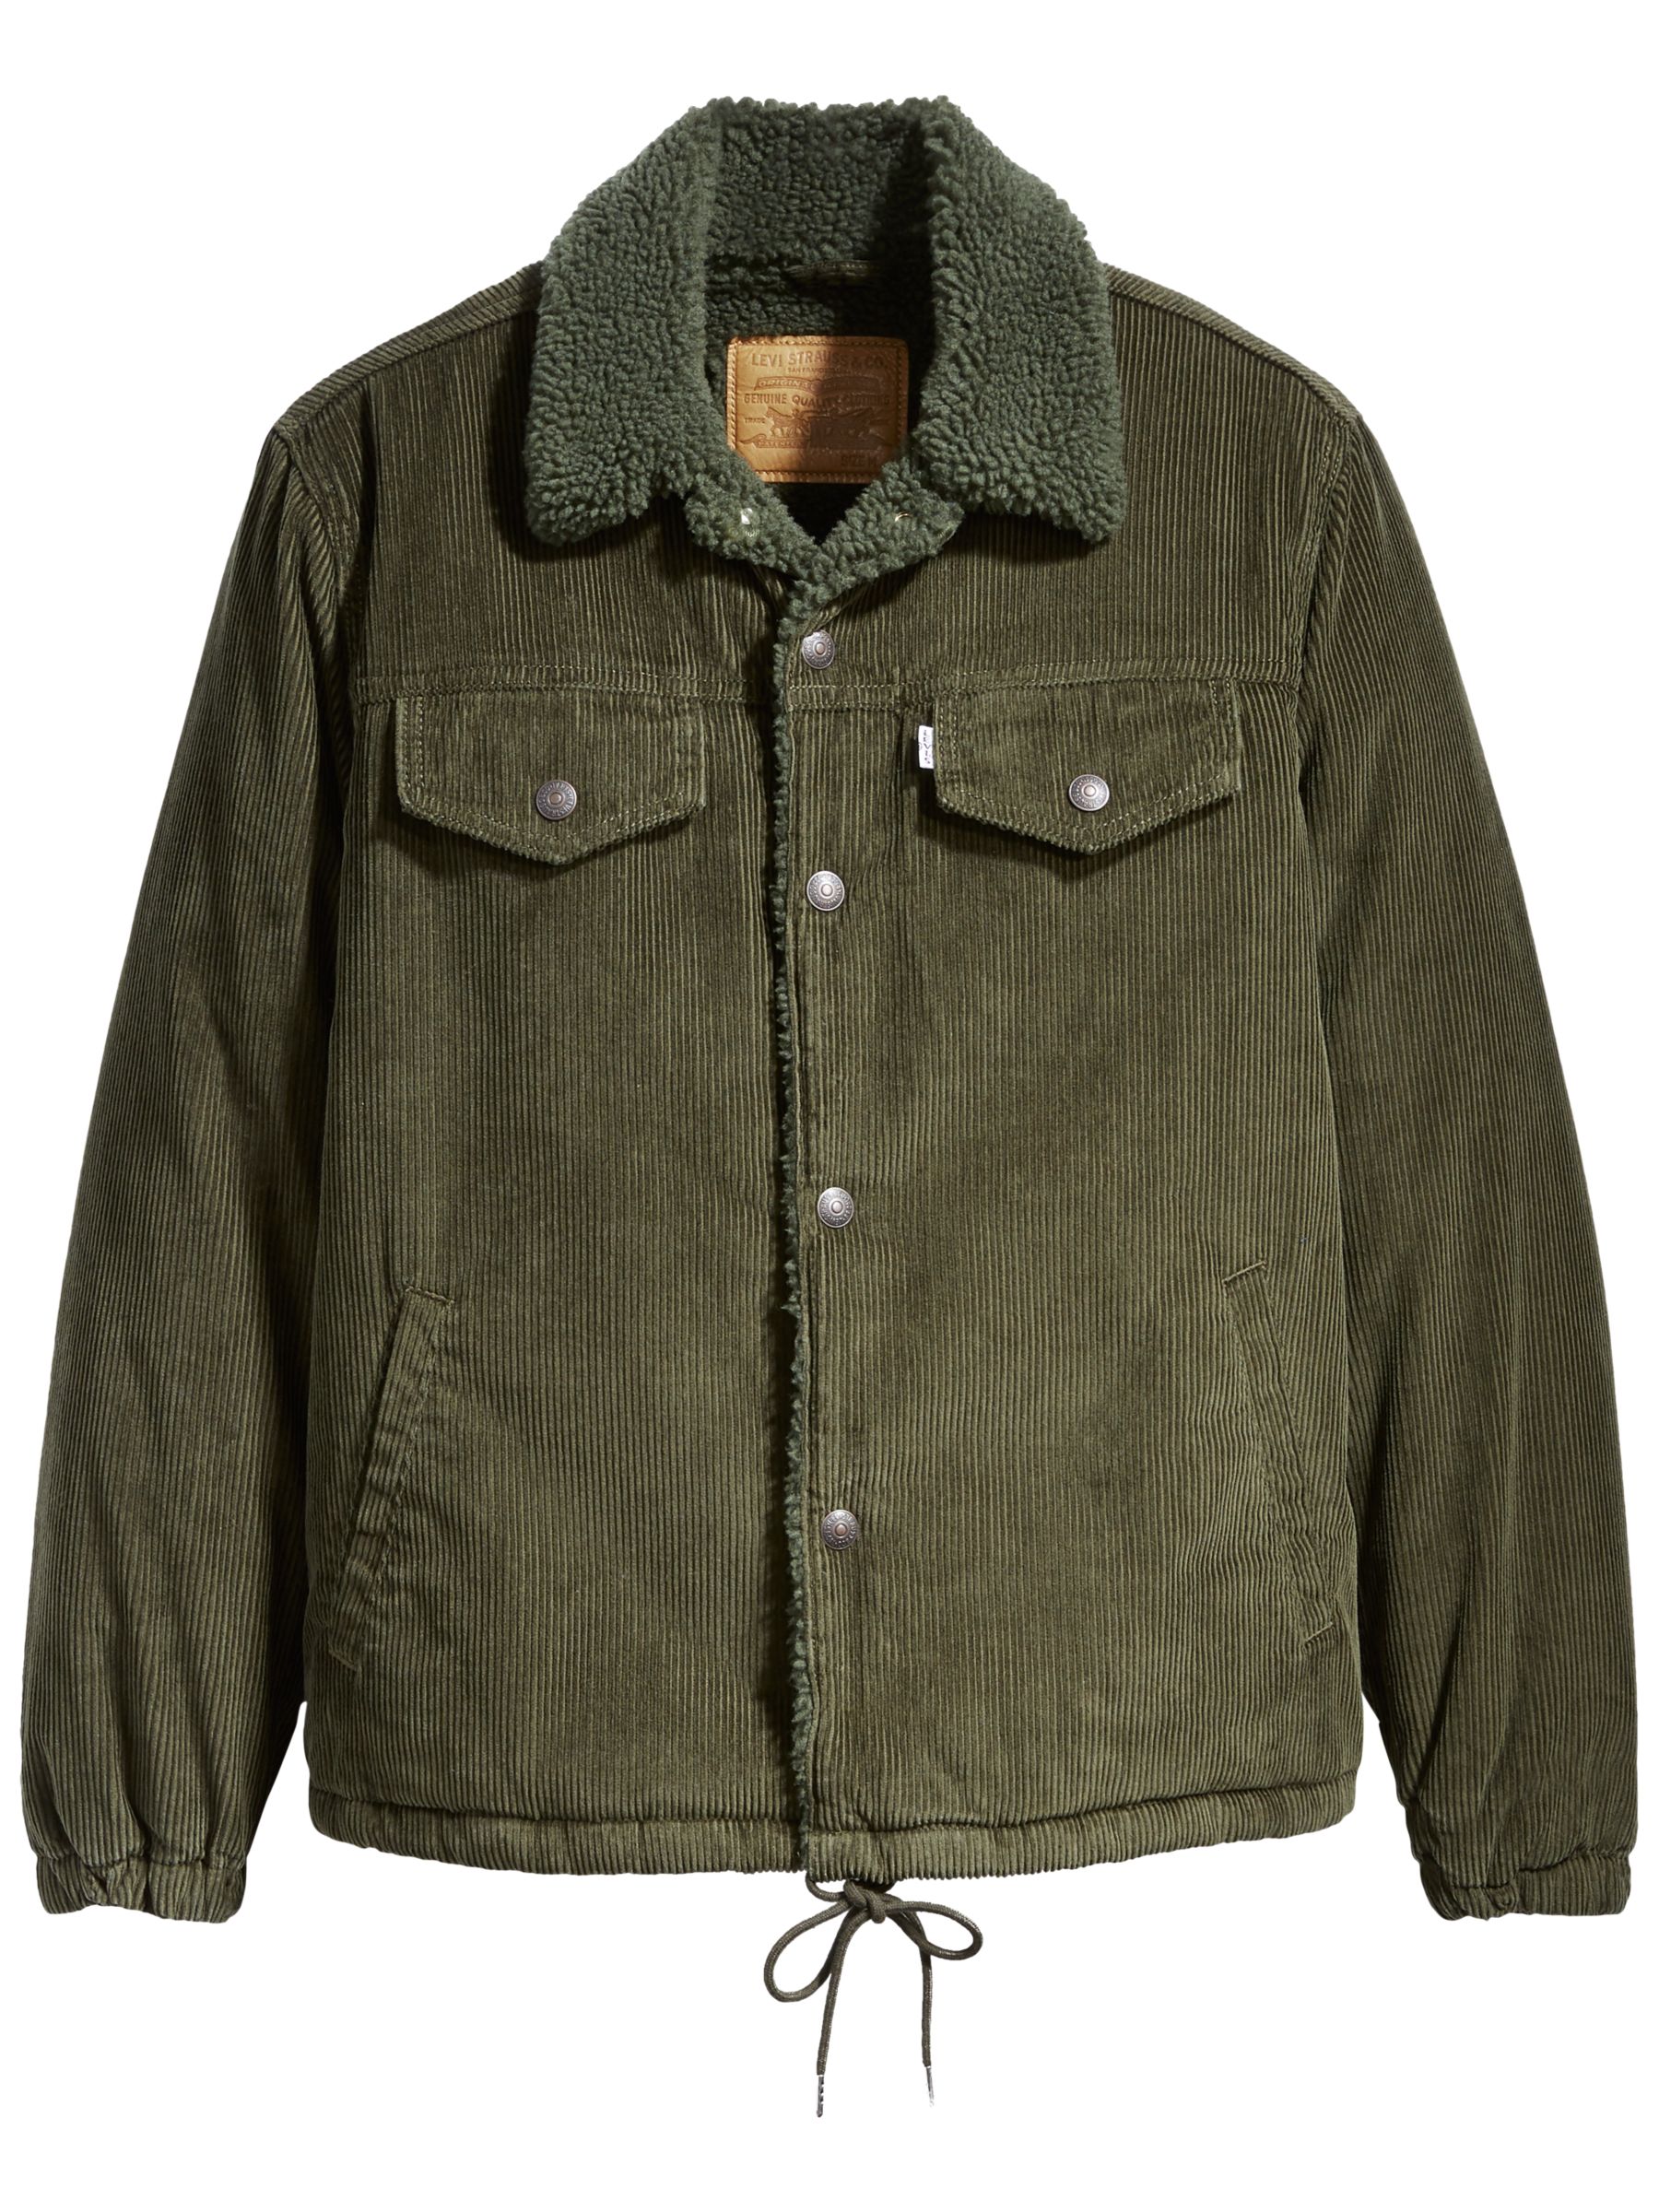 levis green corduroy jacket